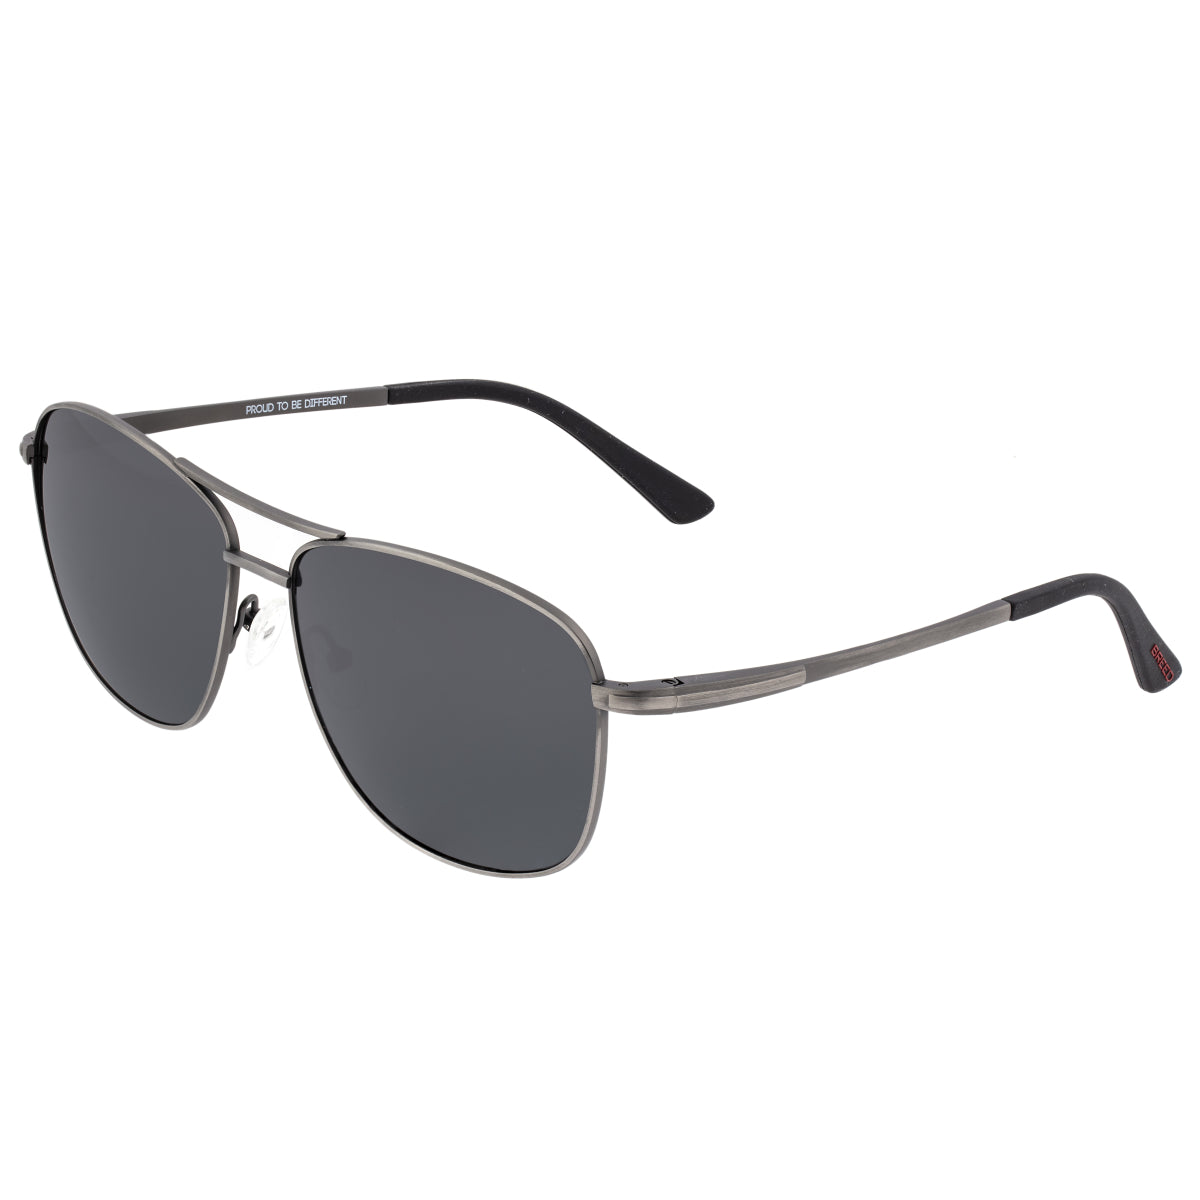 Breed Hera Titanium Polarized Sunglasses - Gunmetal/Black - BSG054GY